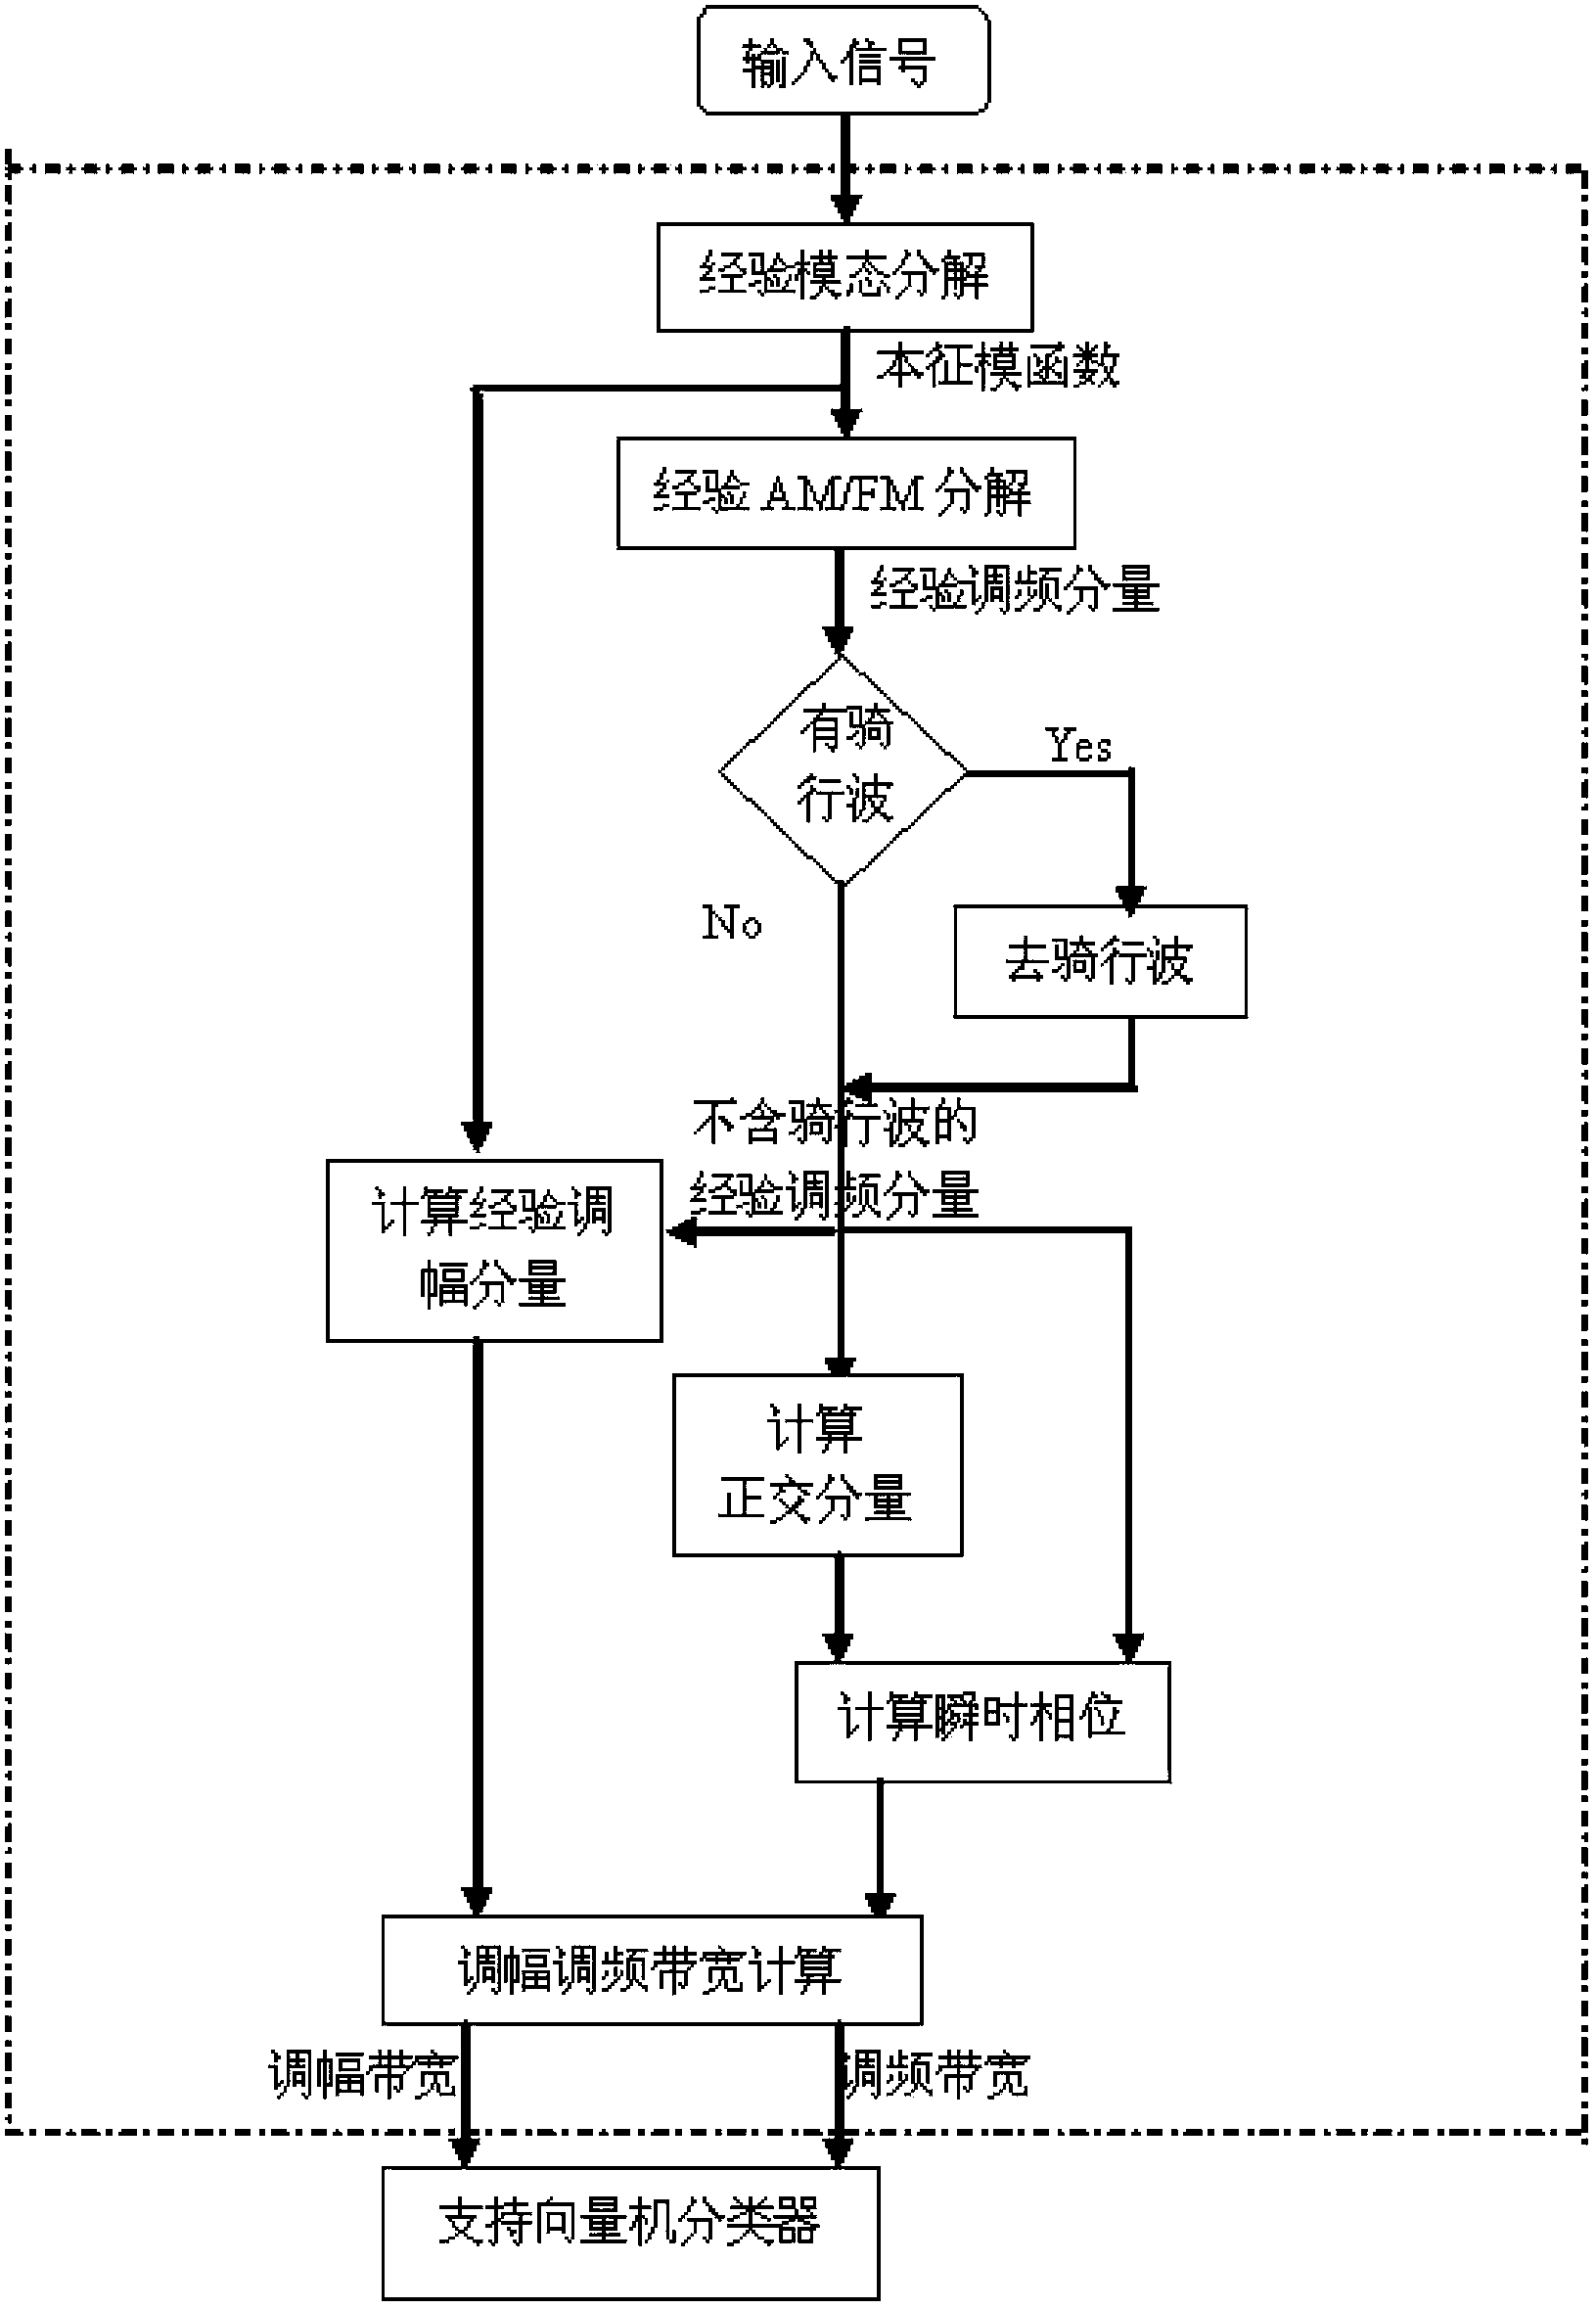 Classification method of electroencephalogram signal